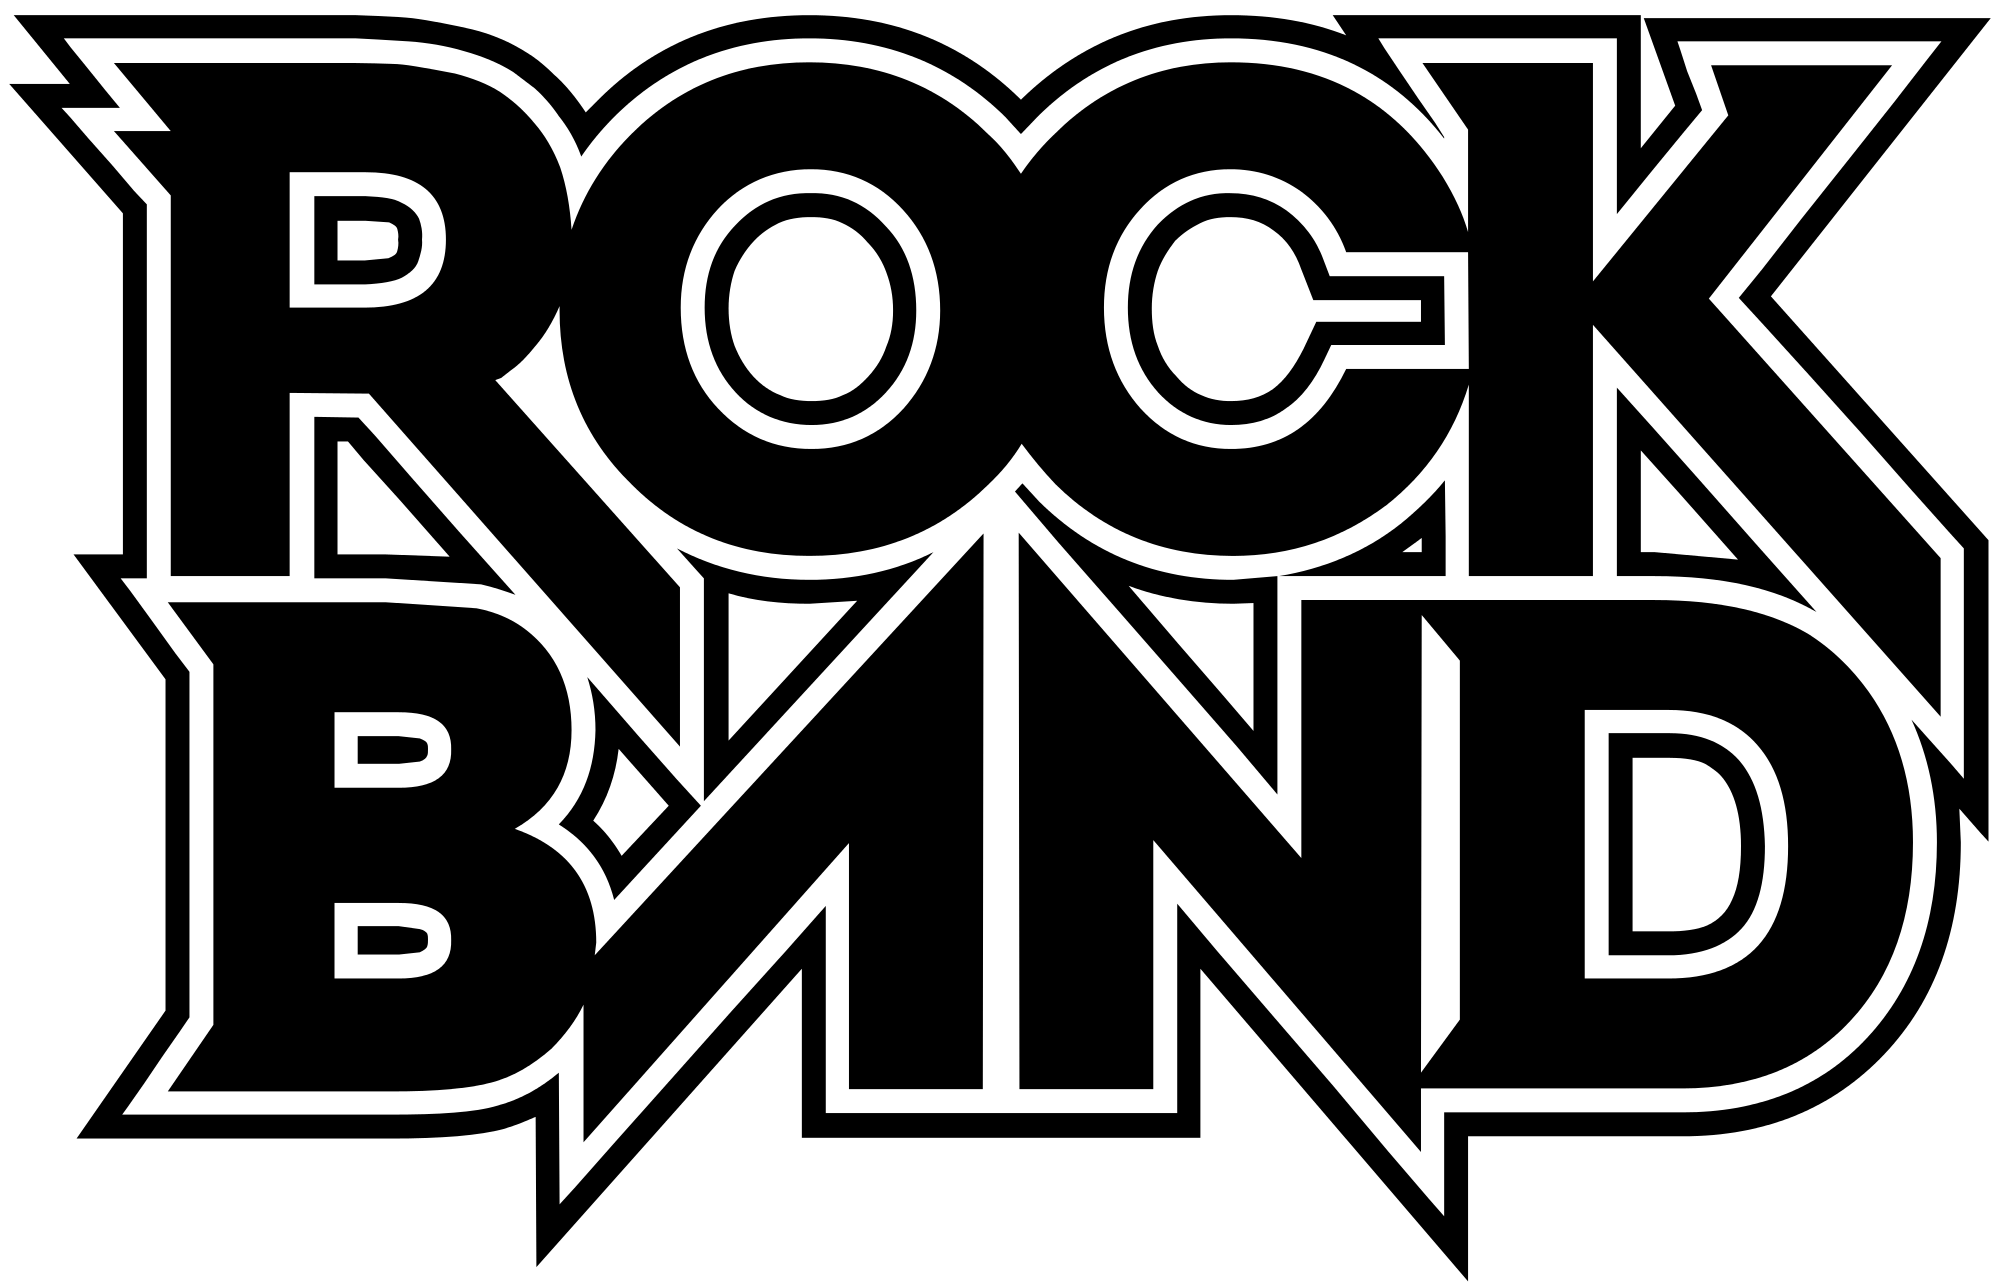 Other Band Logo - File:Rock Band logo.svg - Wikimedia Commons